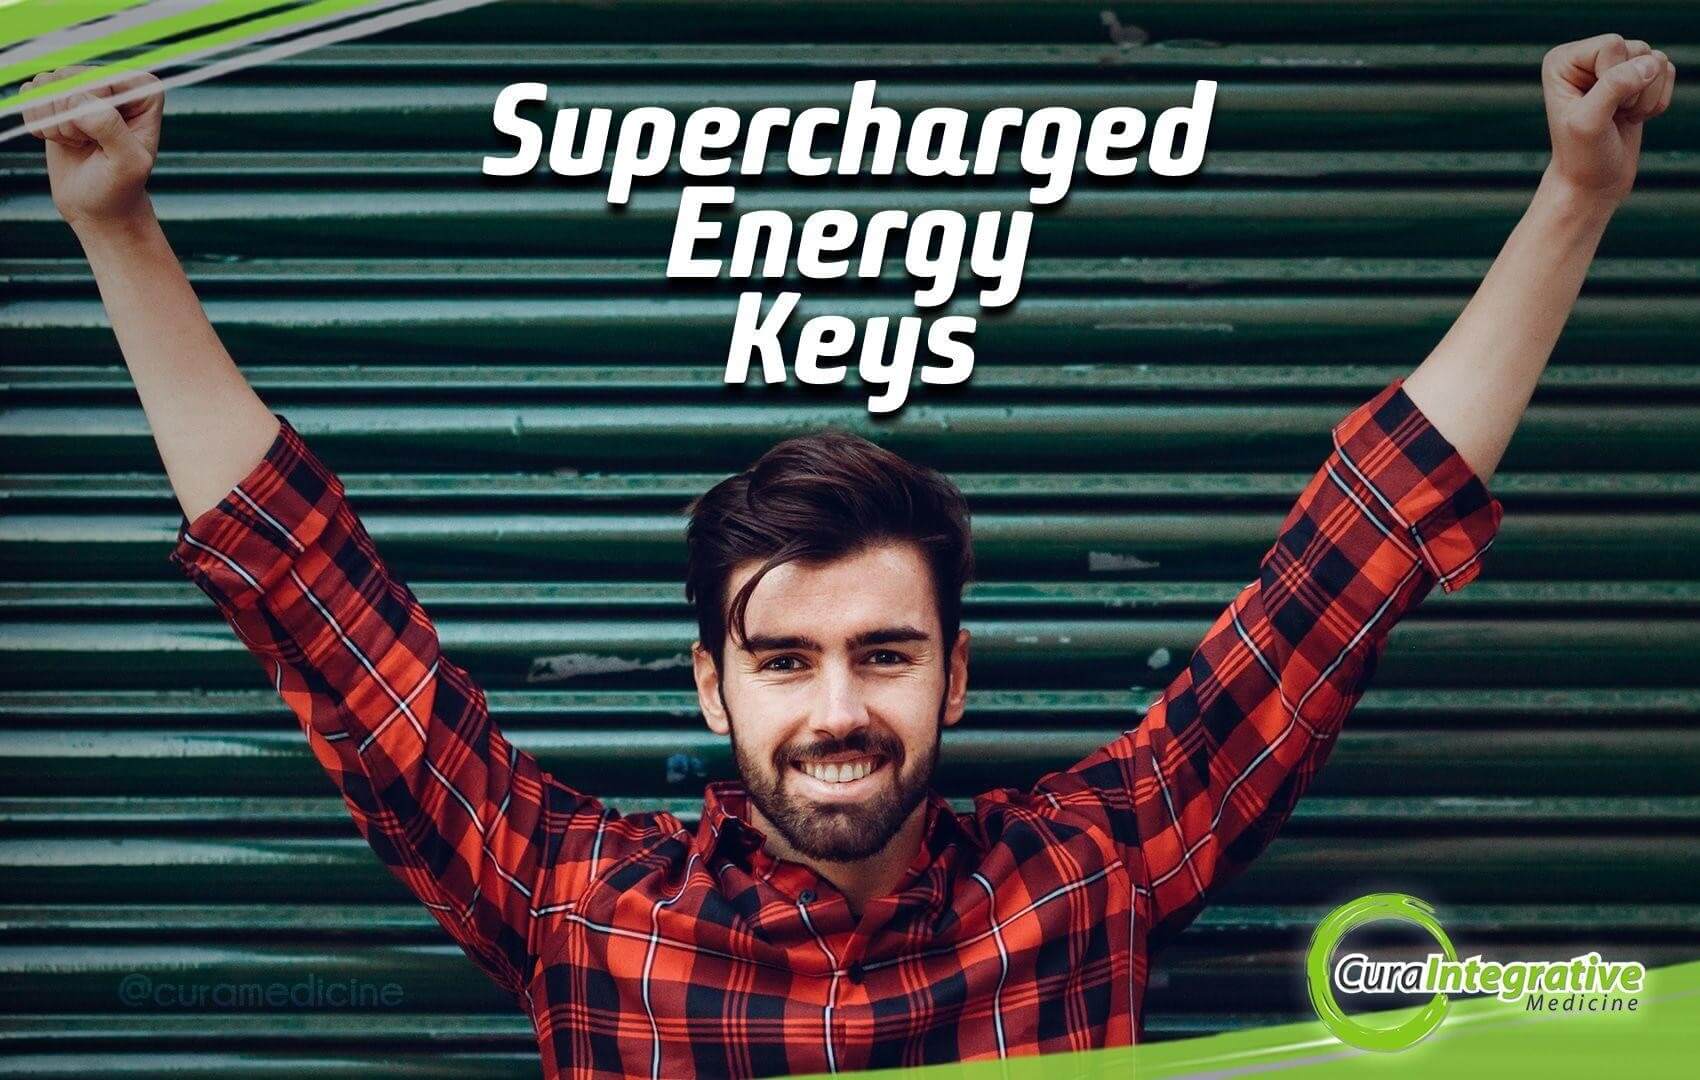 Supercharged Energy Keys